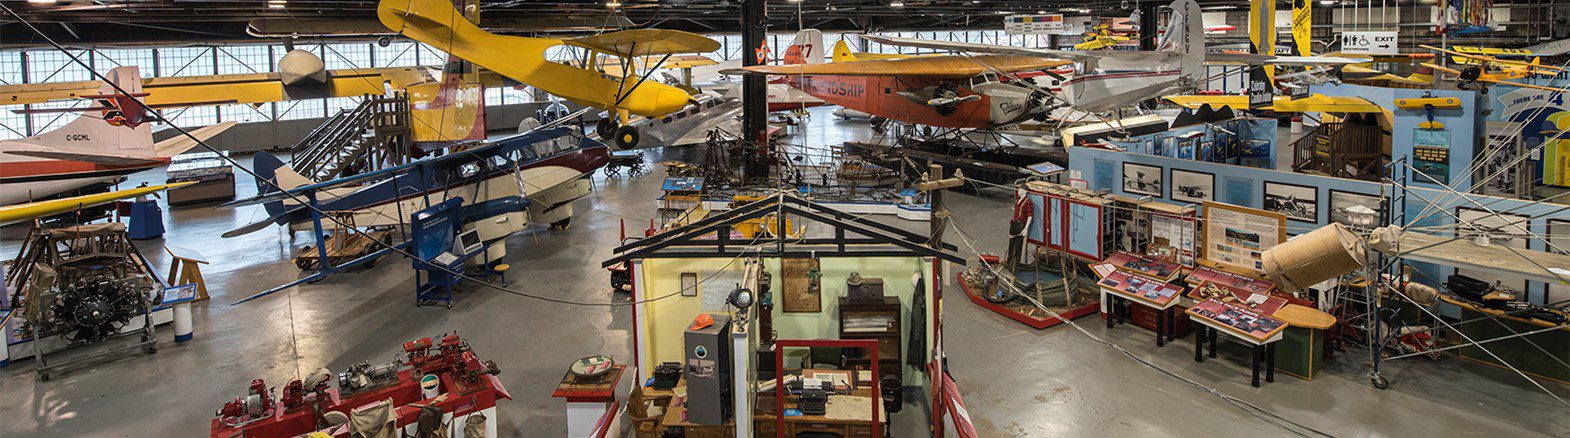 Visit the Canadian Bushplane Heritage - hangar overview - Sault Ste. Marie, OntarioCentre